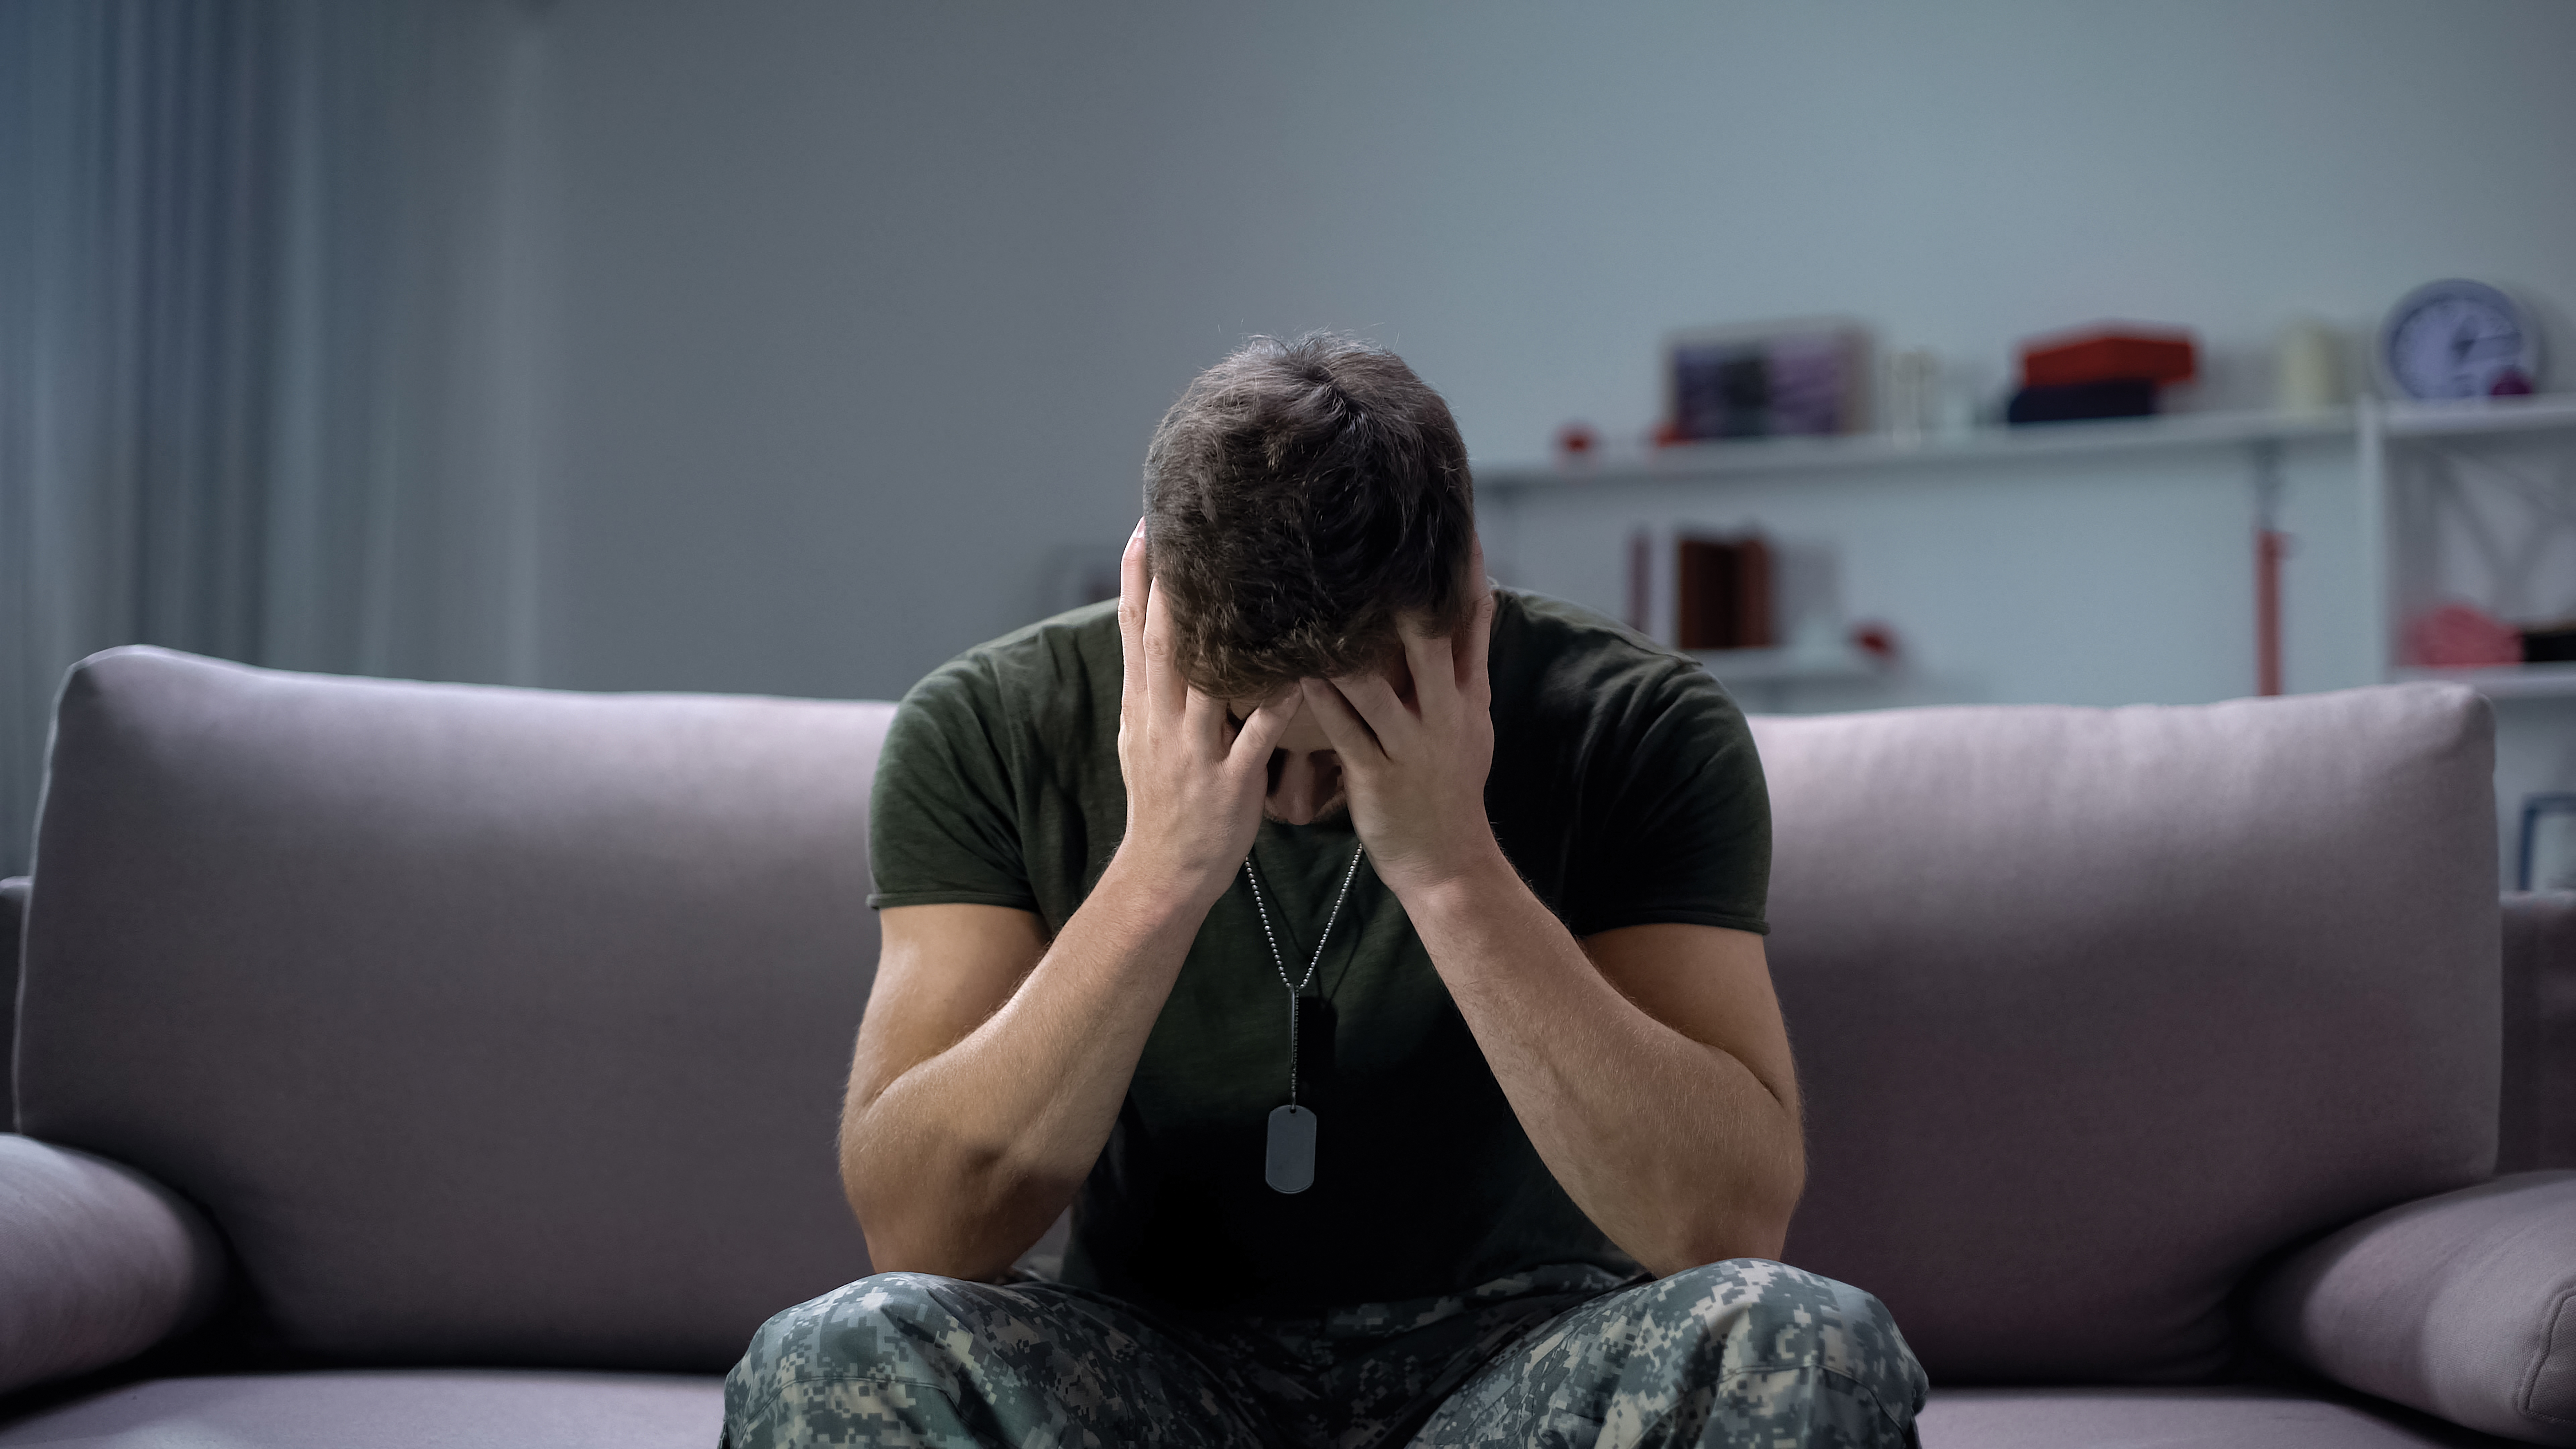 PTSD Treatment Centers